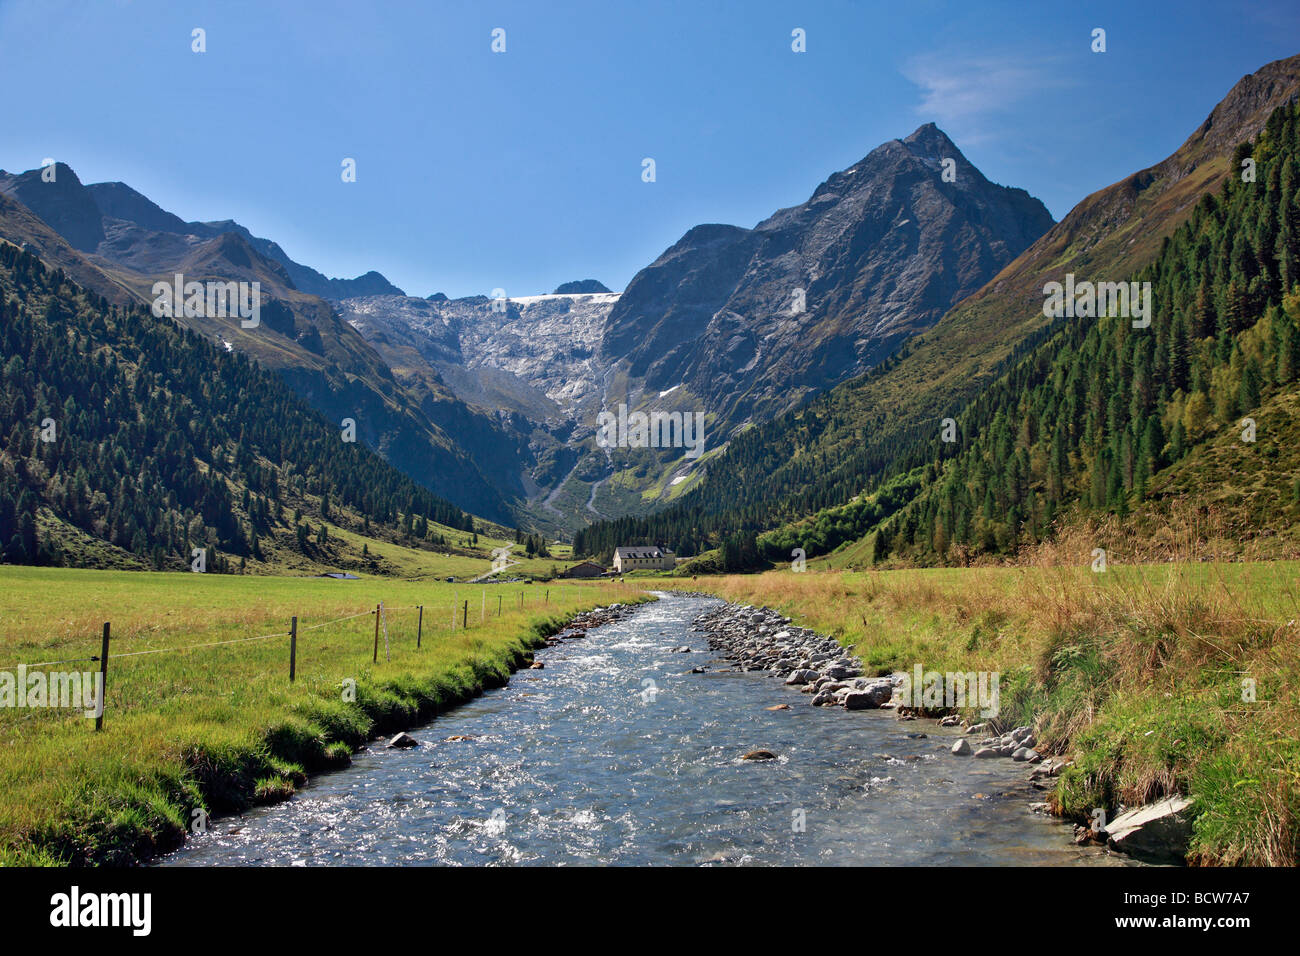 Mt. Liesenser Fernerkogel, Luesenser, ghiacciaio, Luesenser Valley, Hospiz, Alpi dello Stubai in Tirolo, Austria, Europa Foto Stock